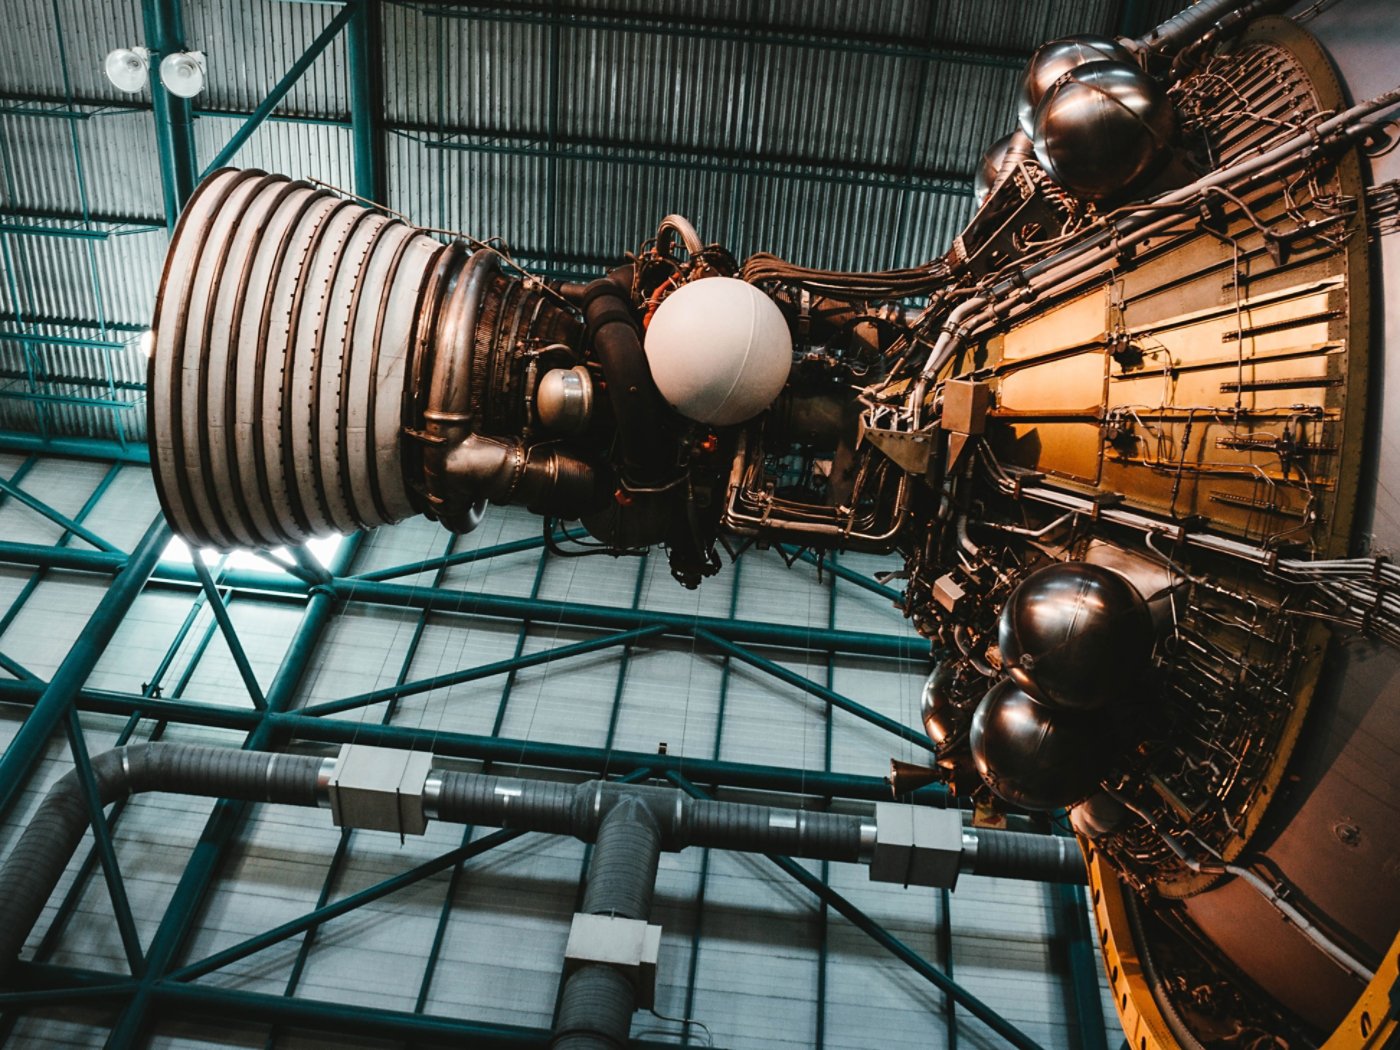 A process of building a space rocket engine at NASA